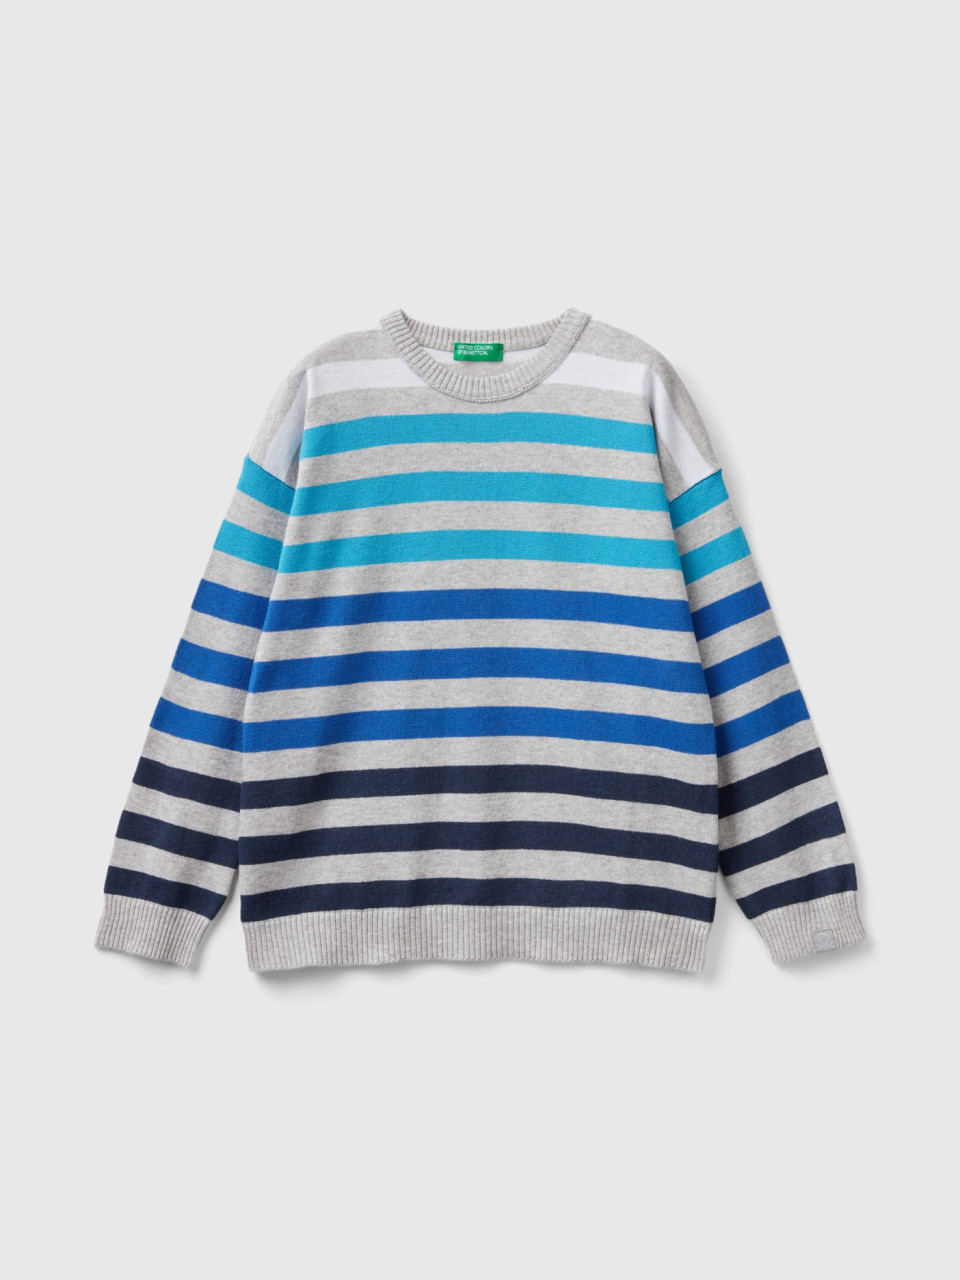 Benetton, Striped Sweater, Light Gray, Kids